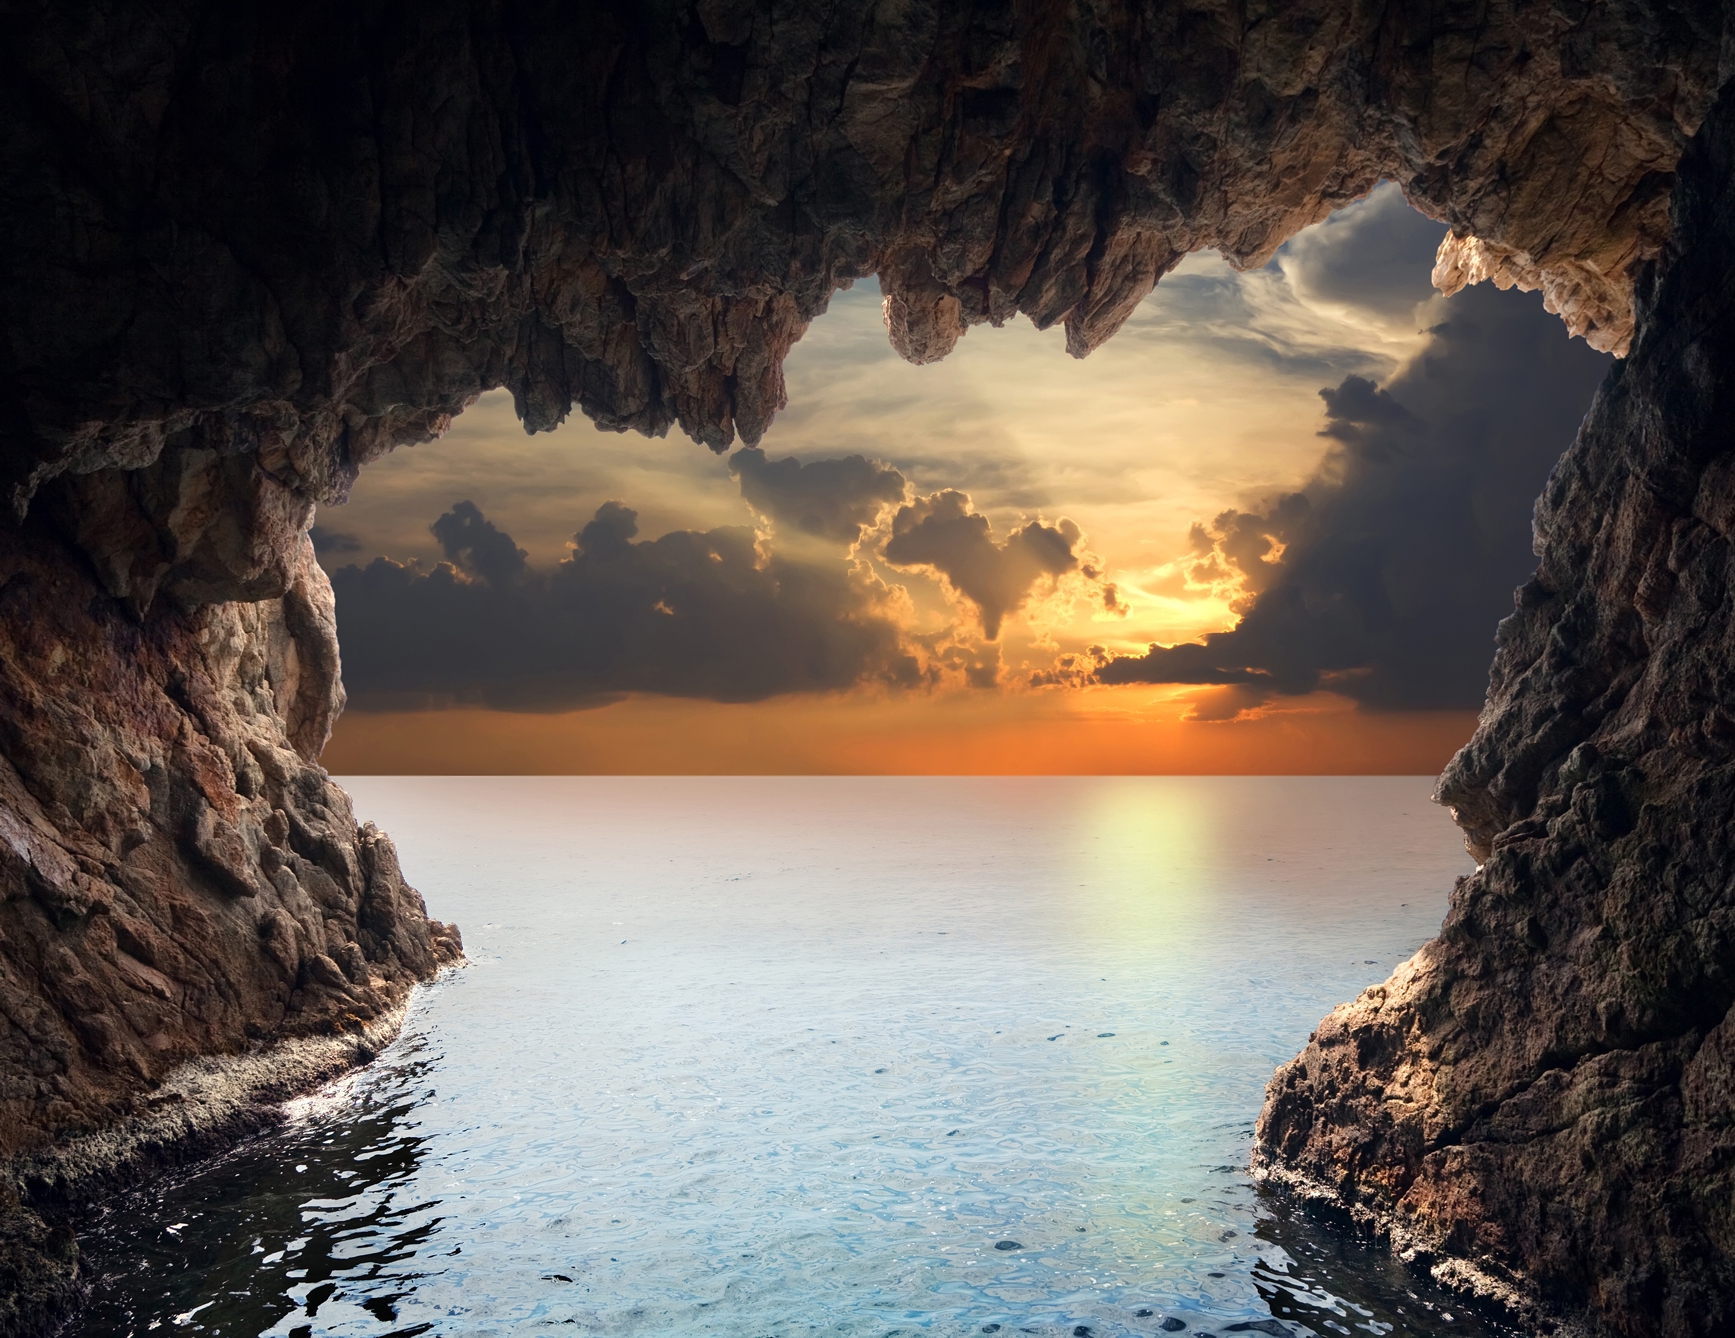 Vlies XXL-Poster Fototapete Natur Grotte in der Abendsonne